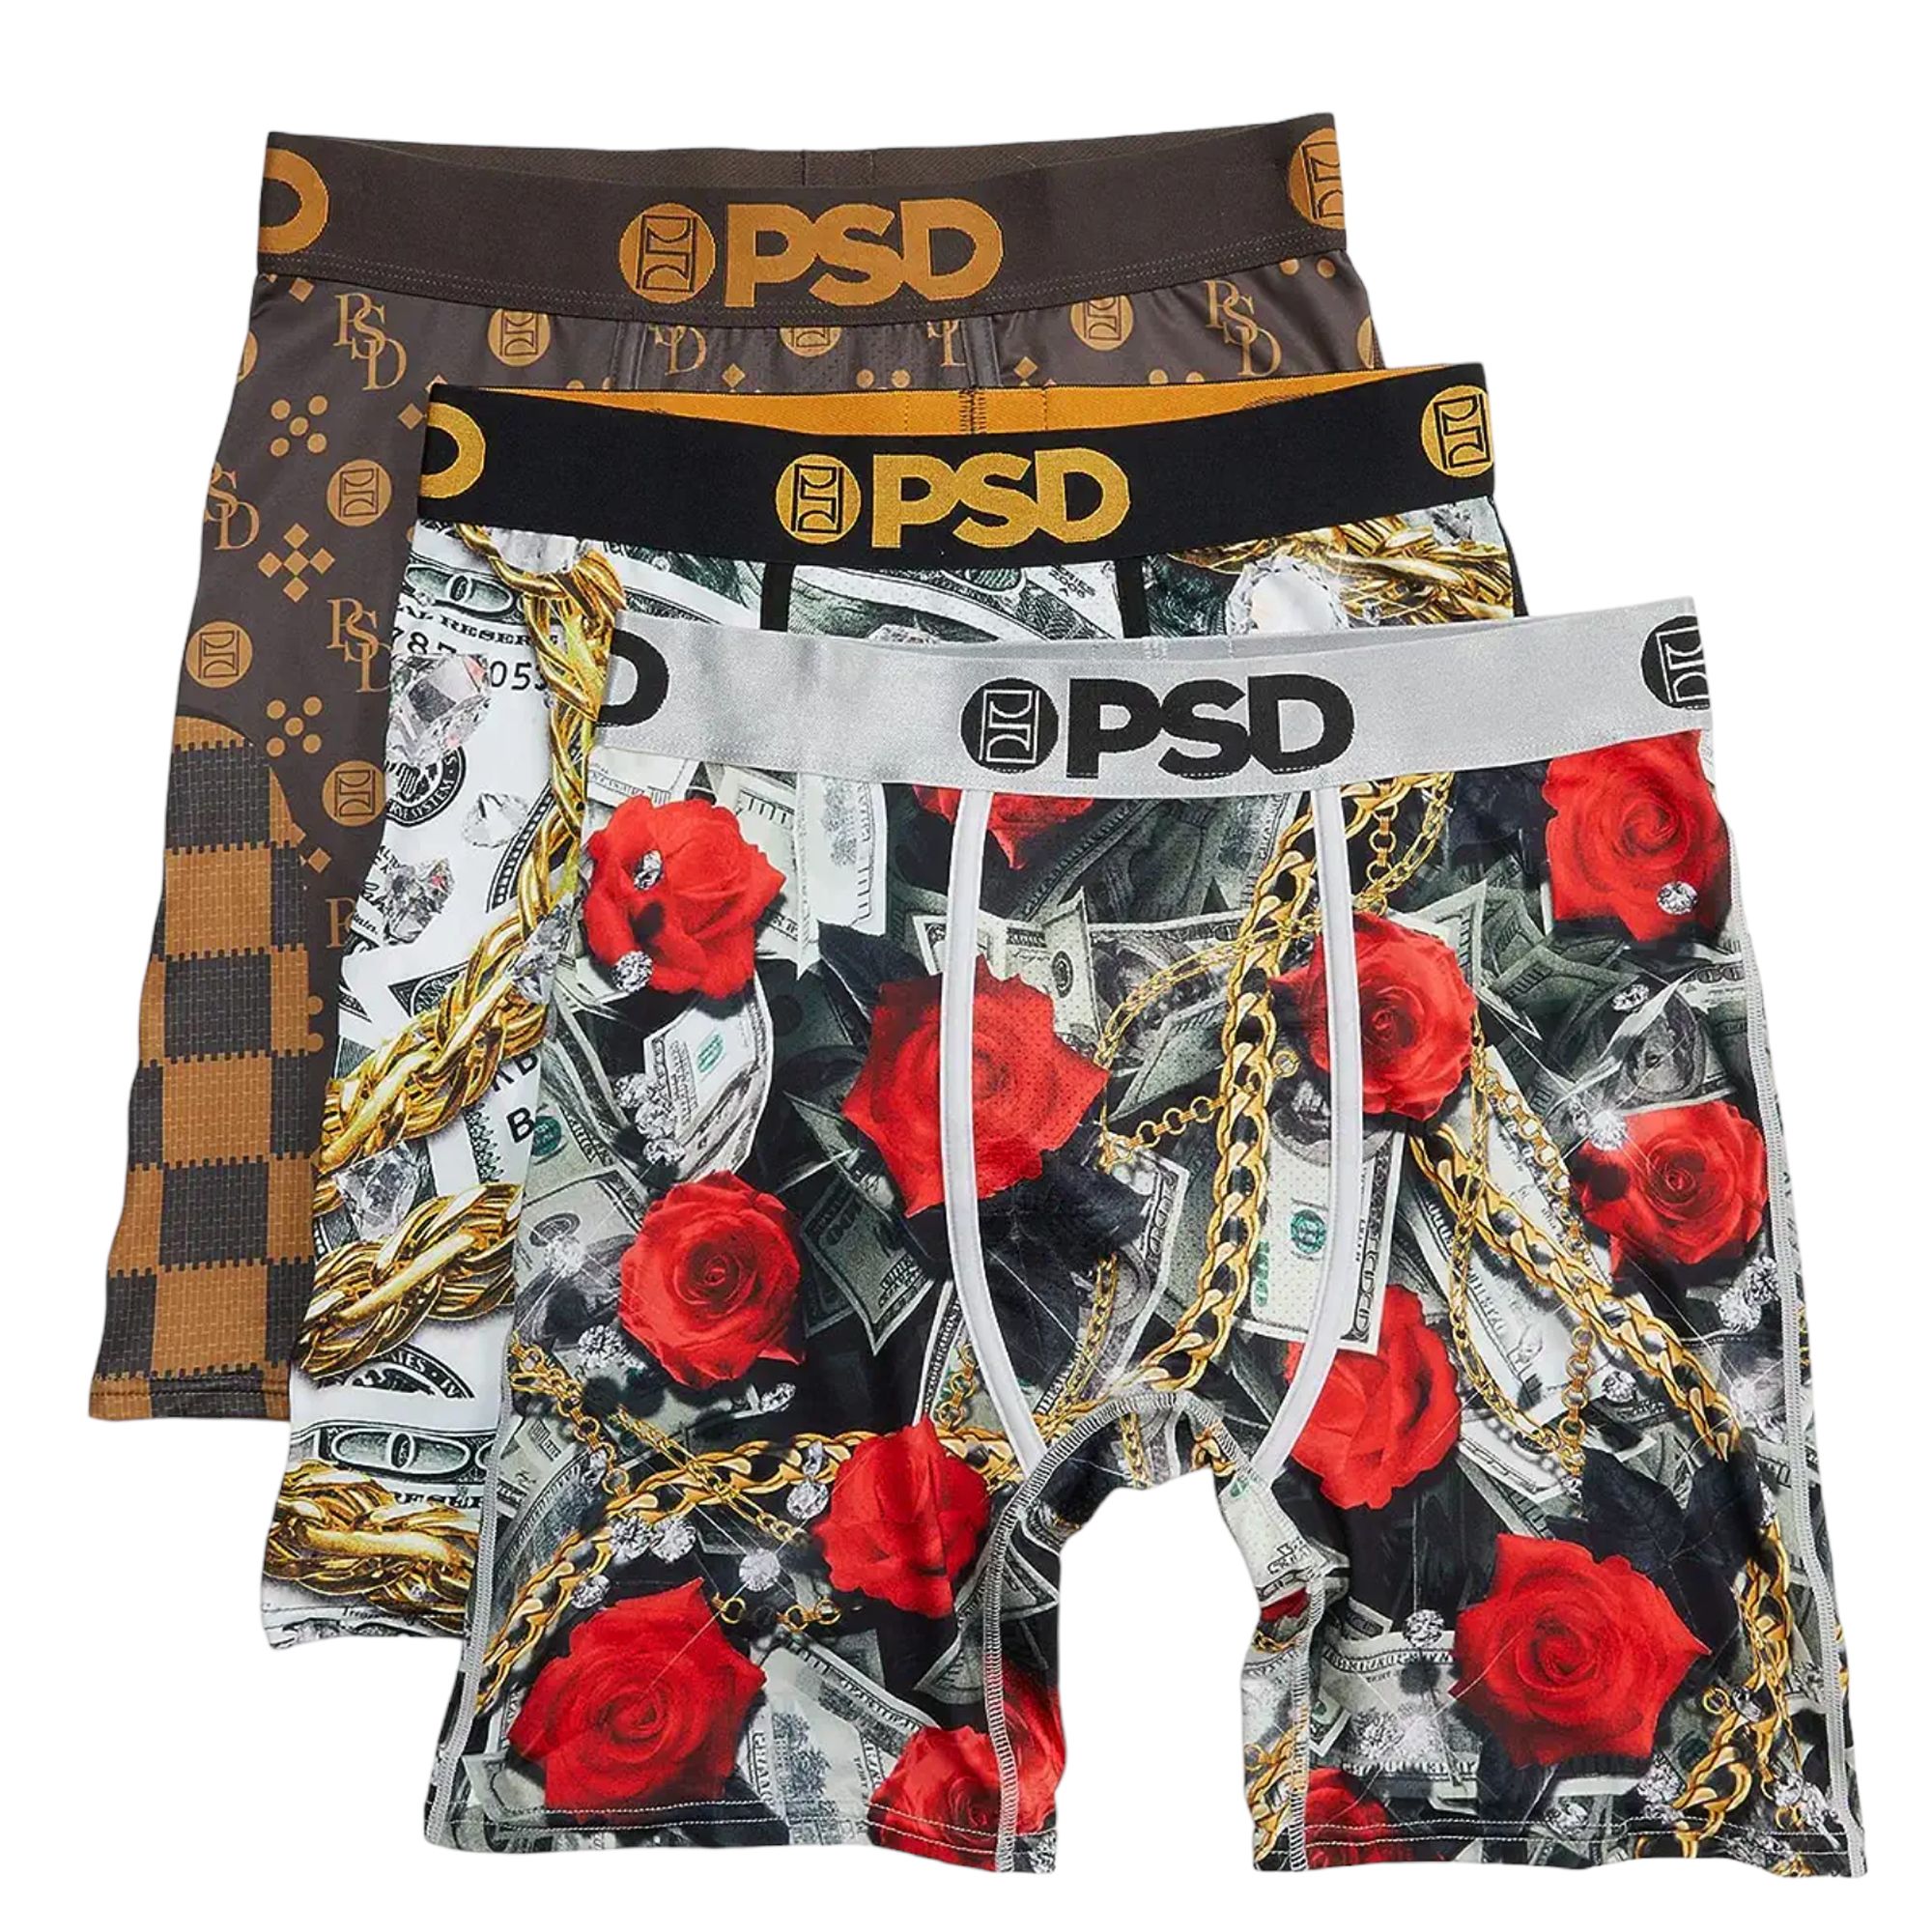 PSD Essentials 3 Pack Stretch Boxer Briefs - Men's Boxers in Multi